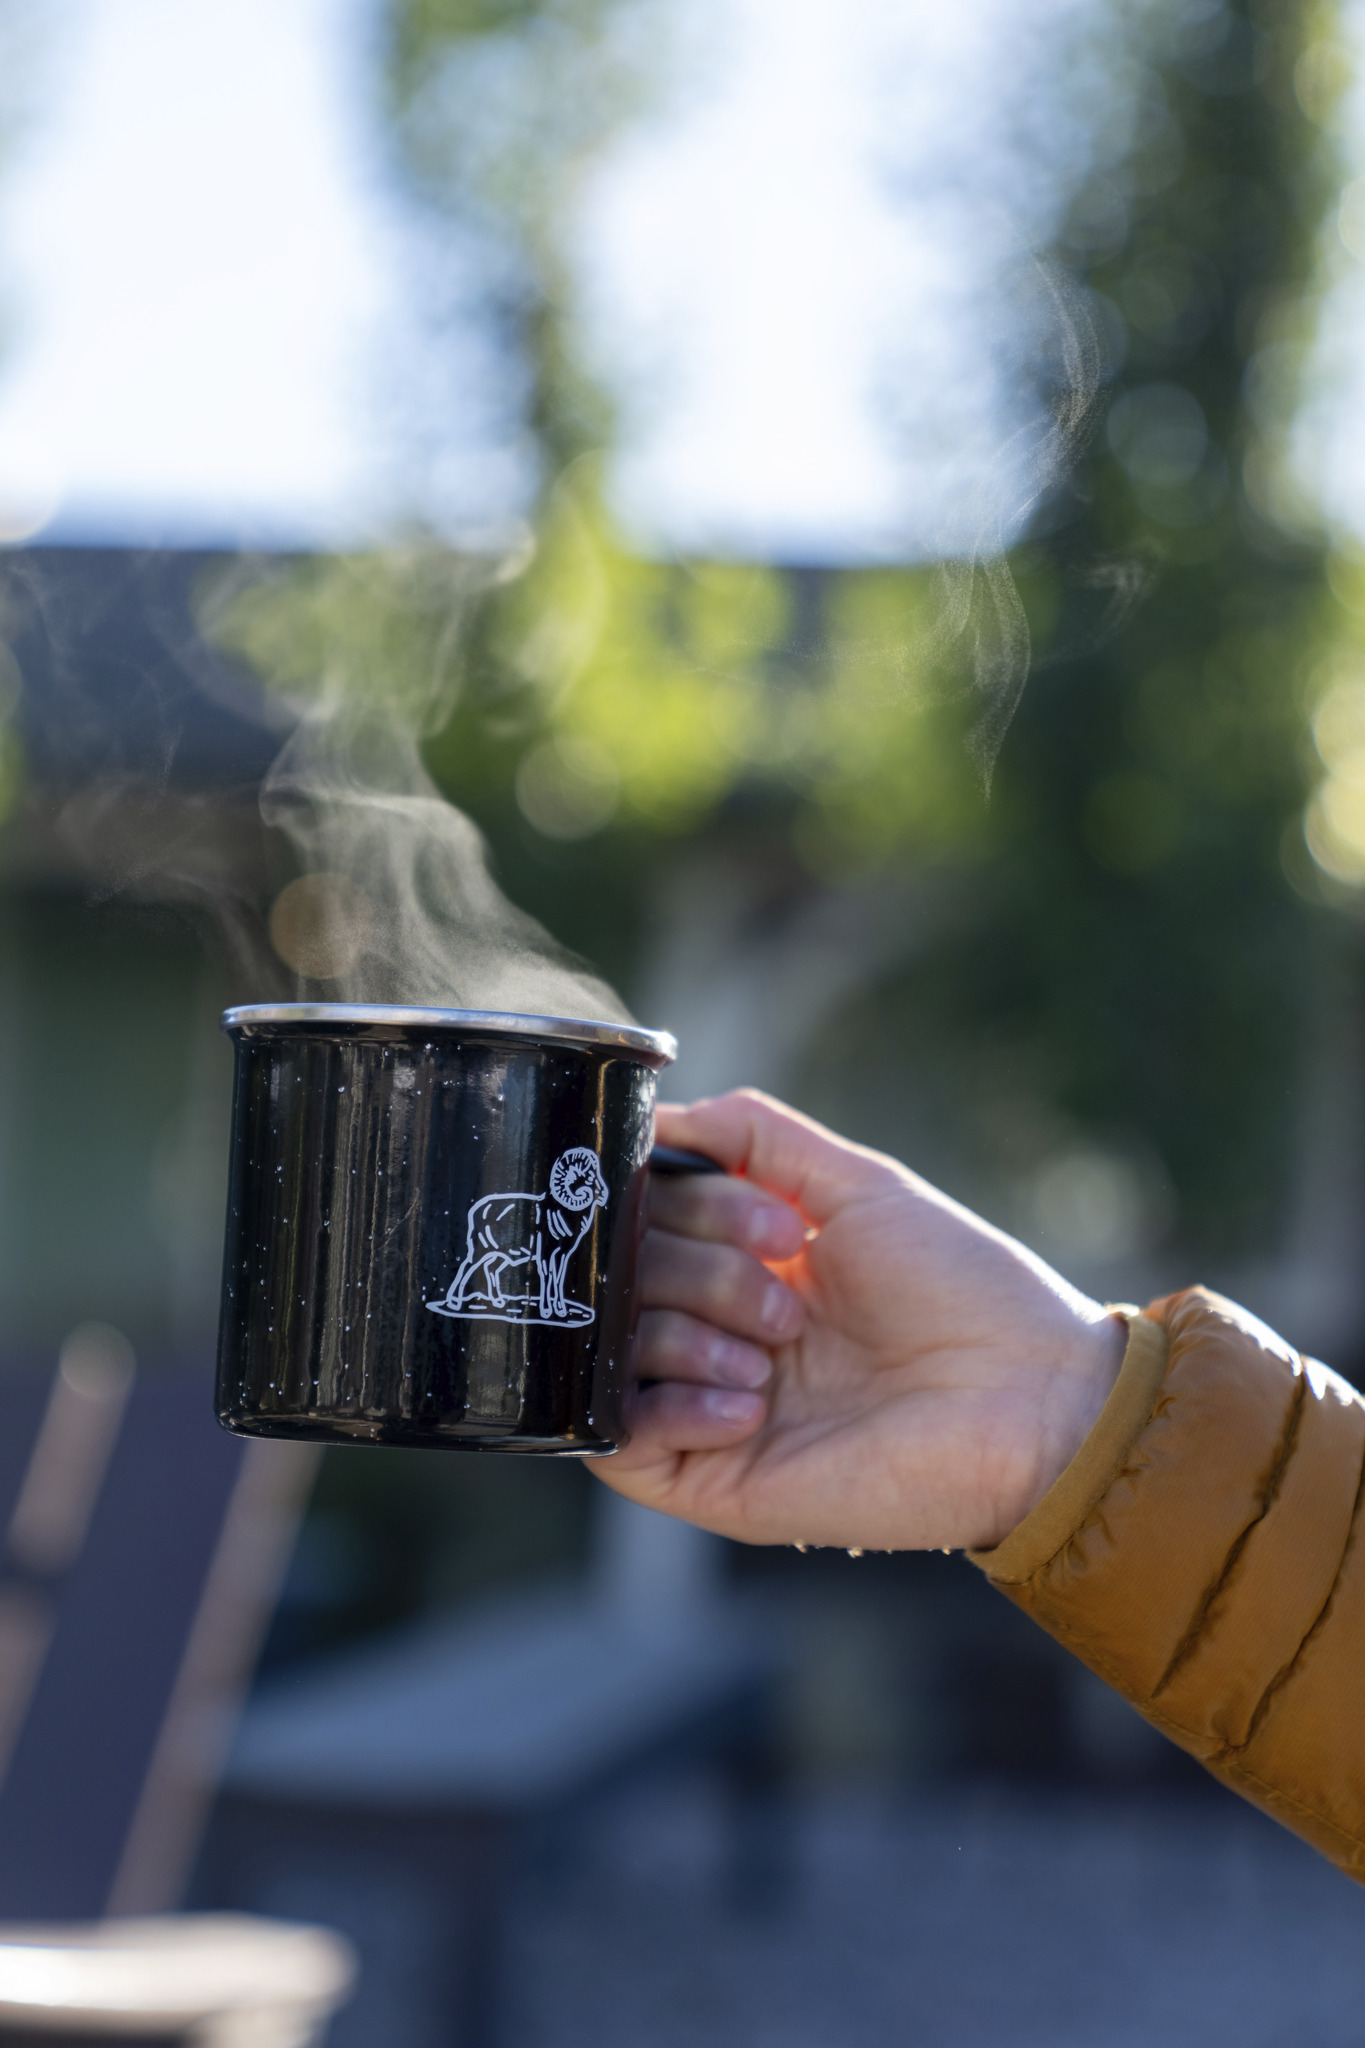 A hand grips a coffee mug, adorned with a longhorn mountain goat logo.